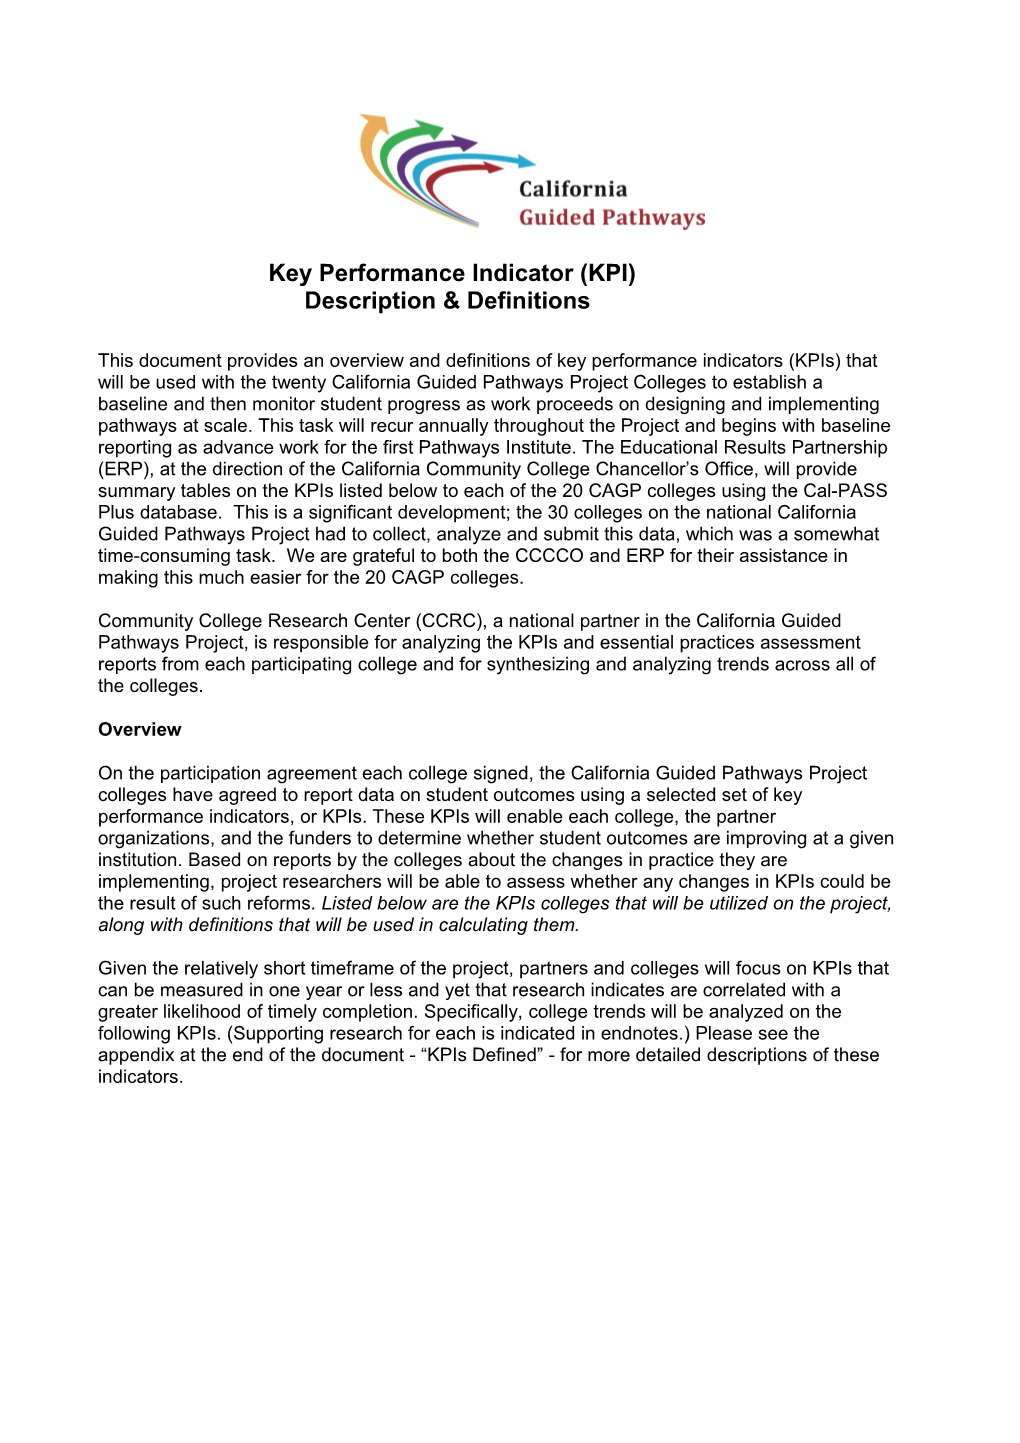 Key Performance Indicator (KPI) Description & Definitions